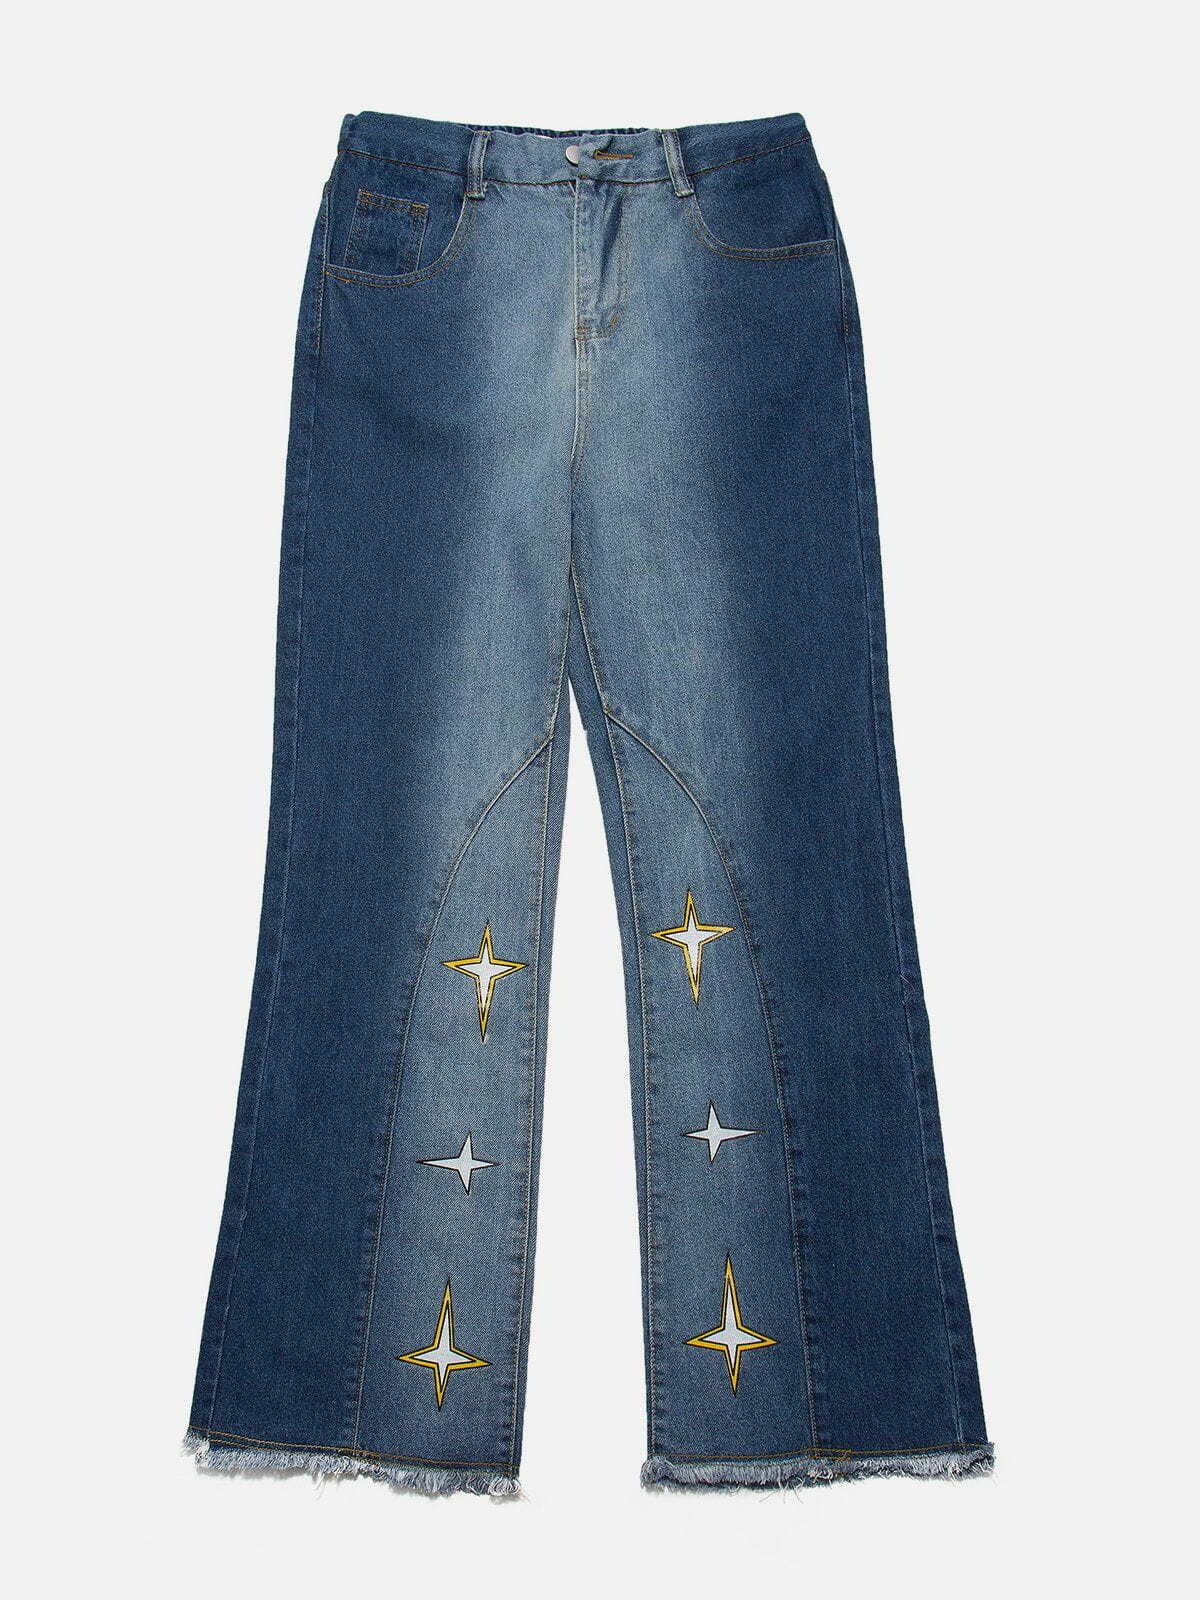 vibrant star graphic jeans edgy gradient design 6462